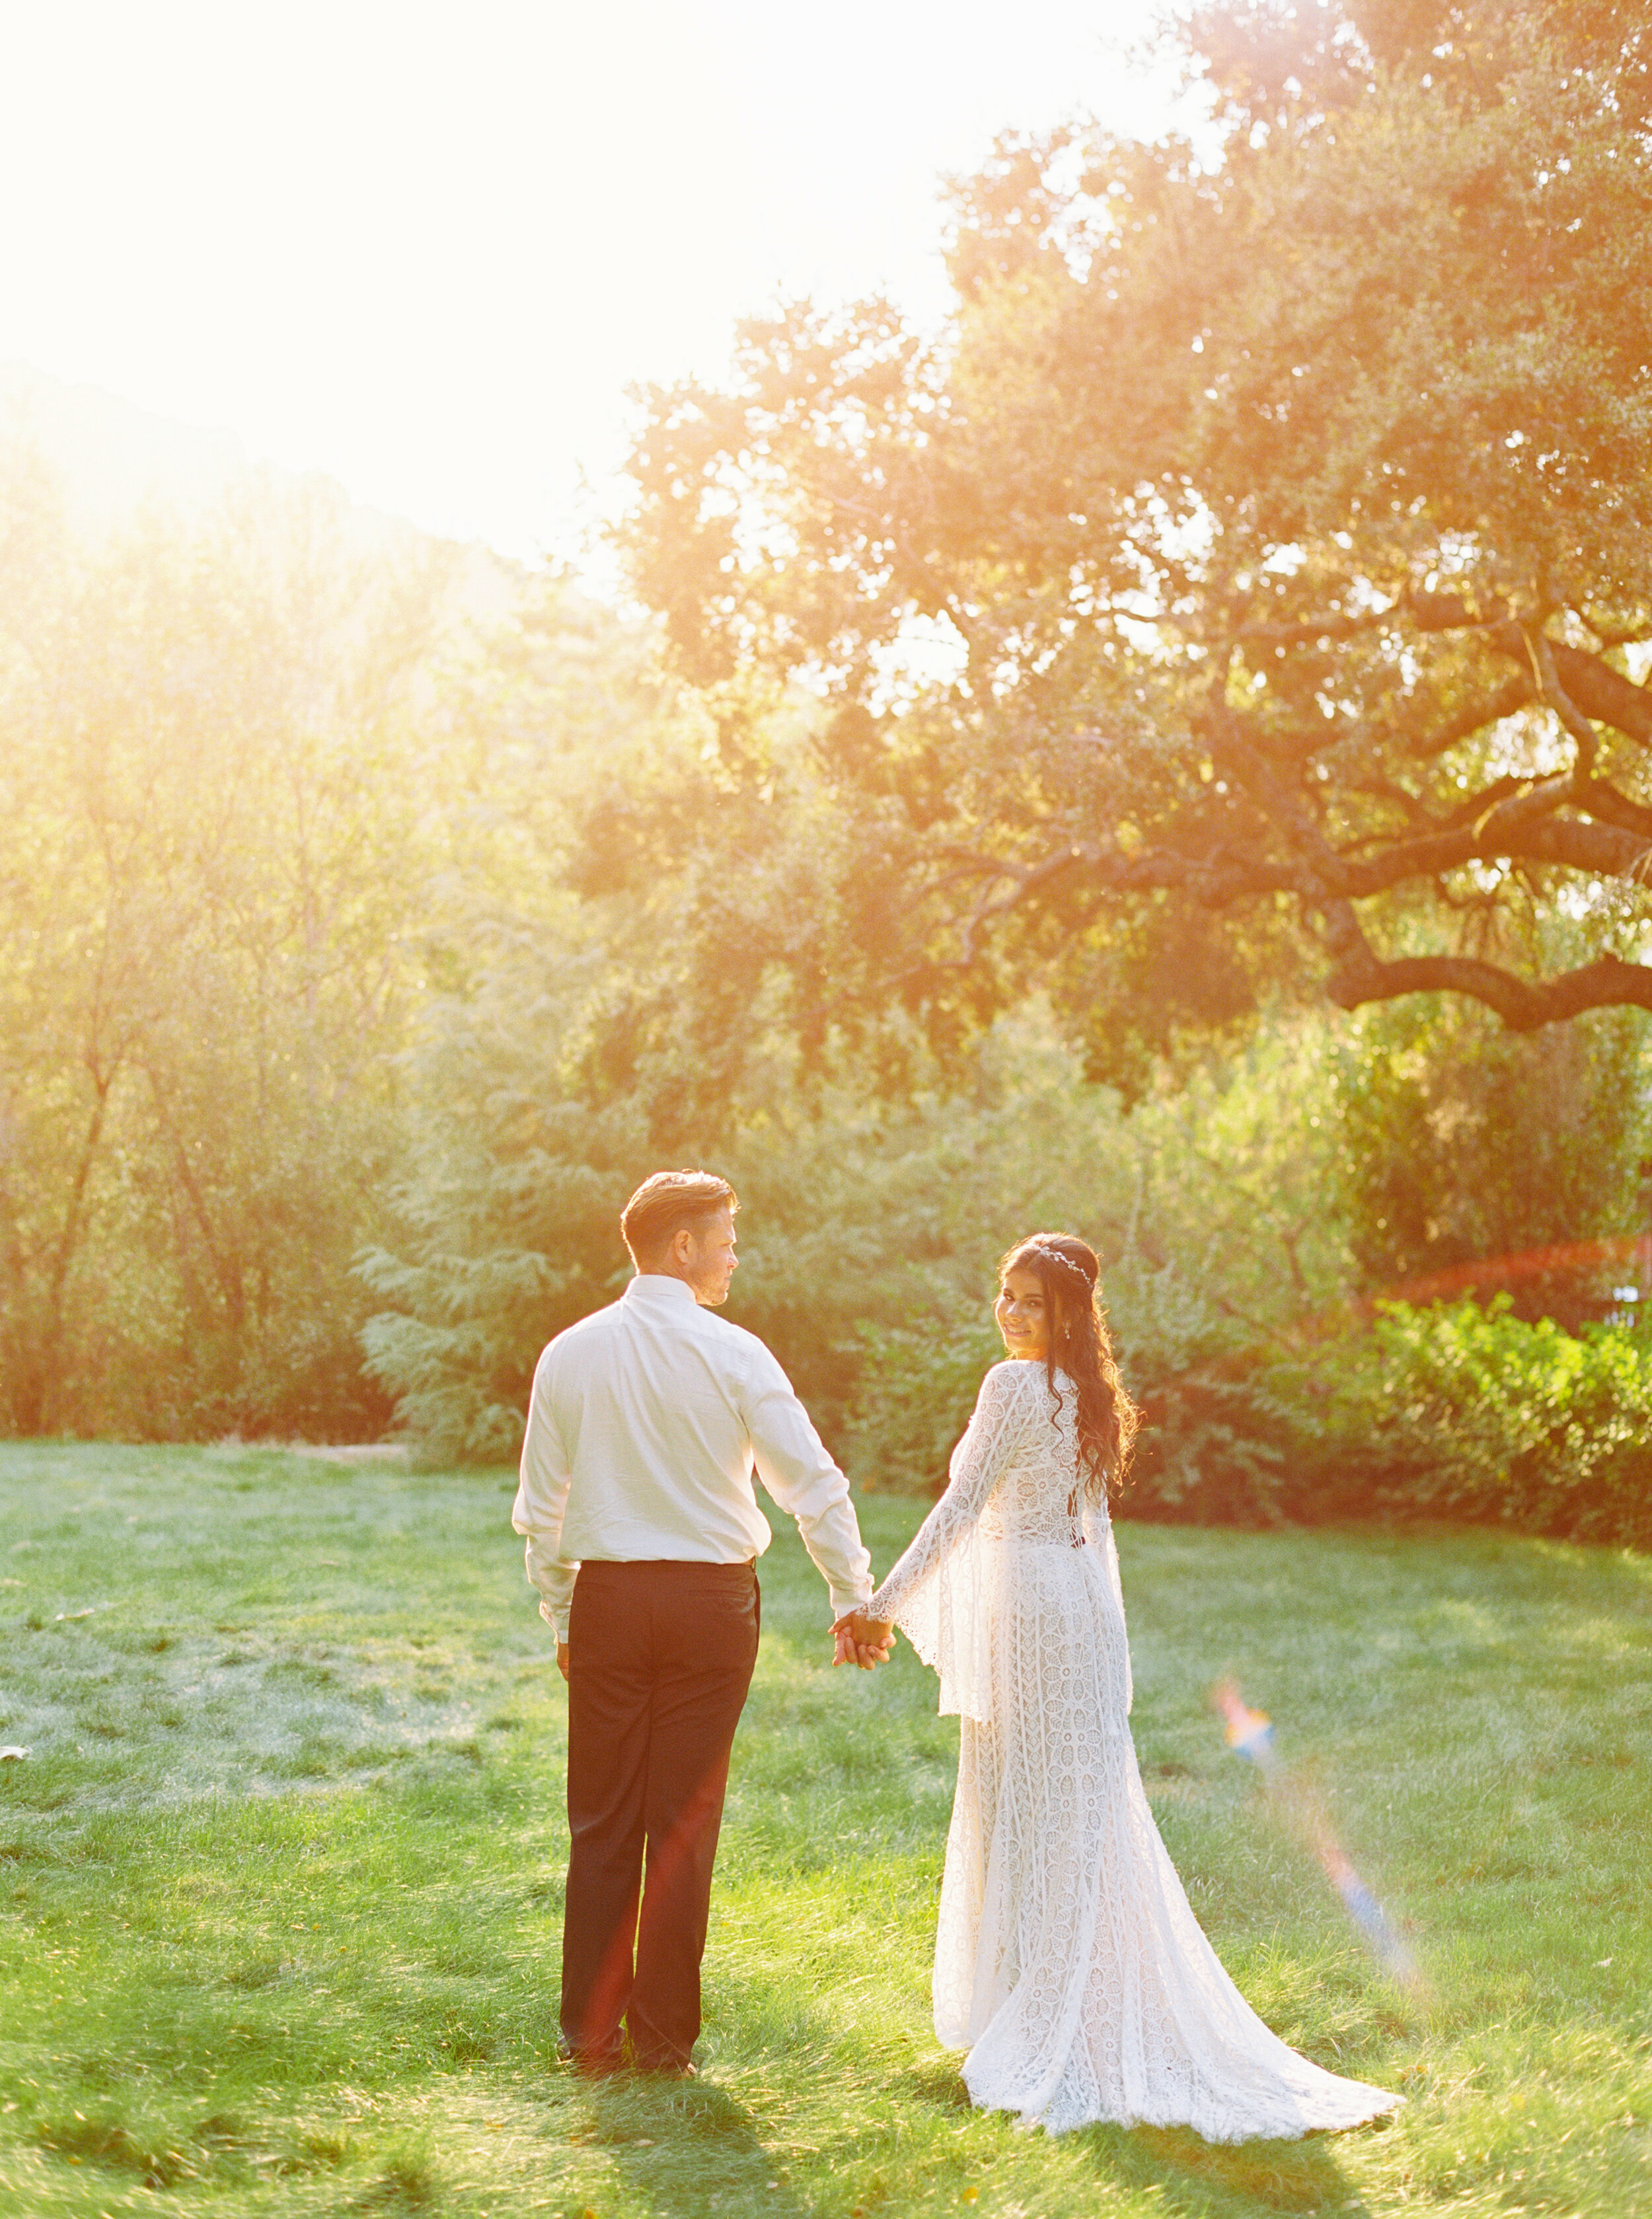 Sarahi Hadden - An Earthy Summer Boho Inspired Wedding with Sunset Hues at Gardener Ranch-64.jpg